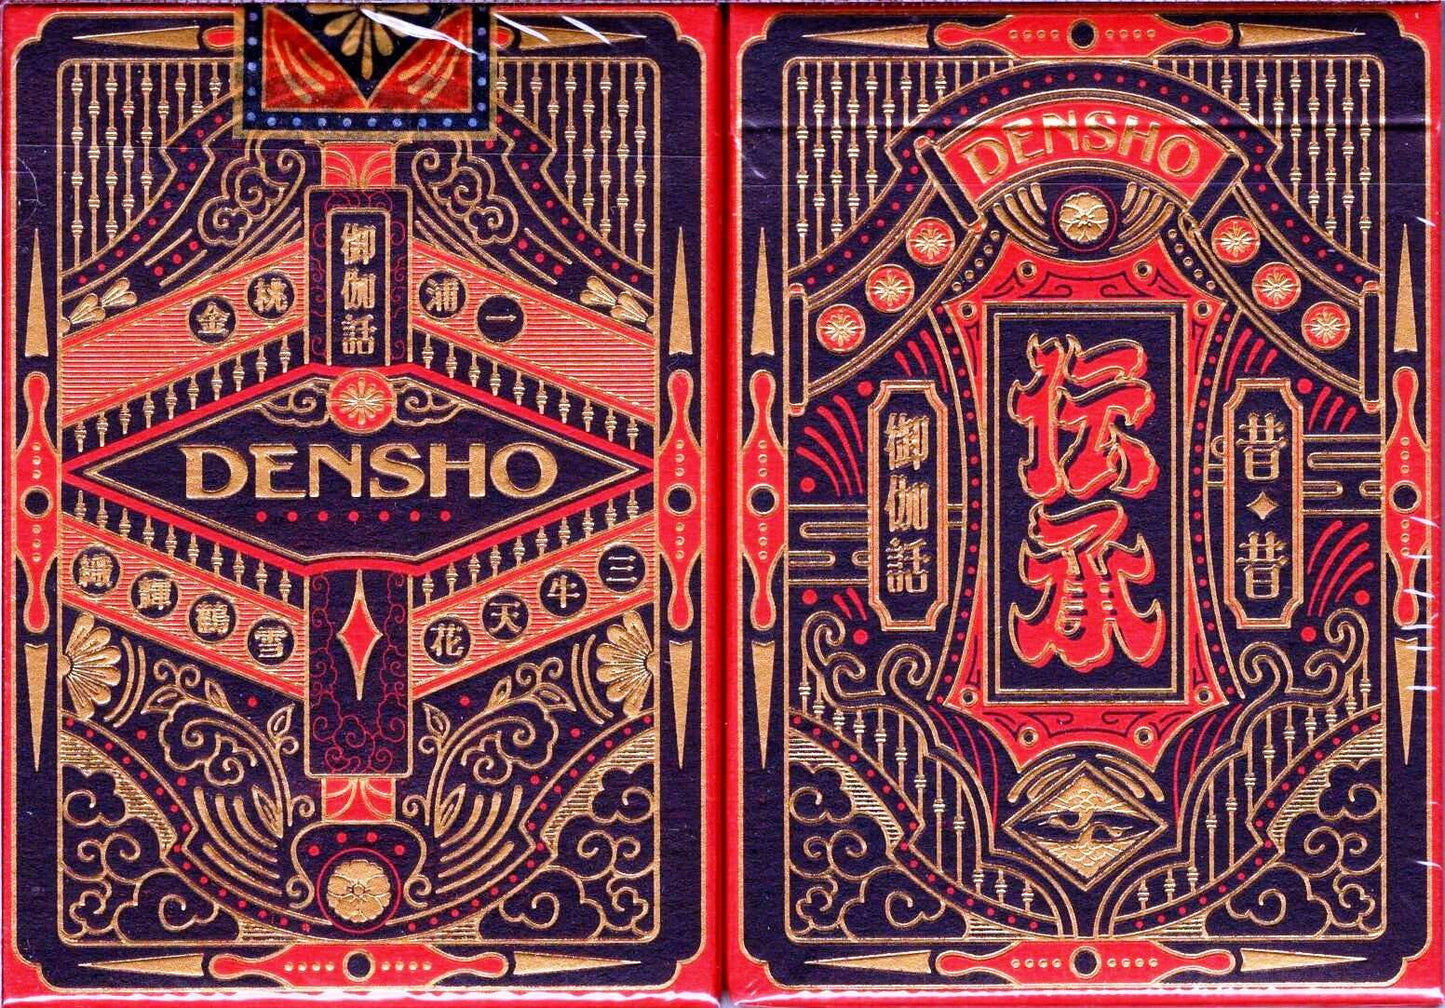 Densho Playing Cards USPCC